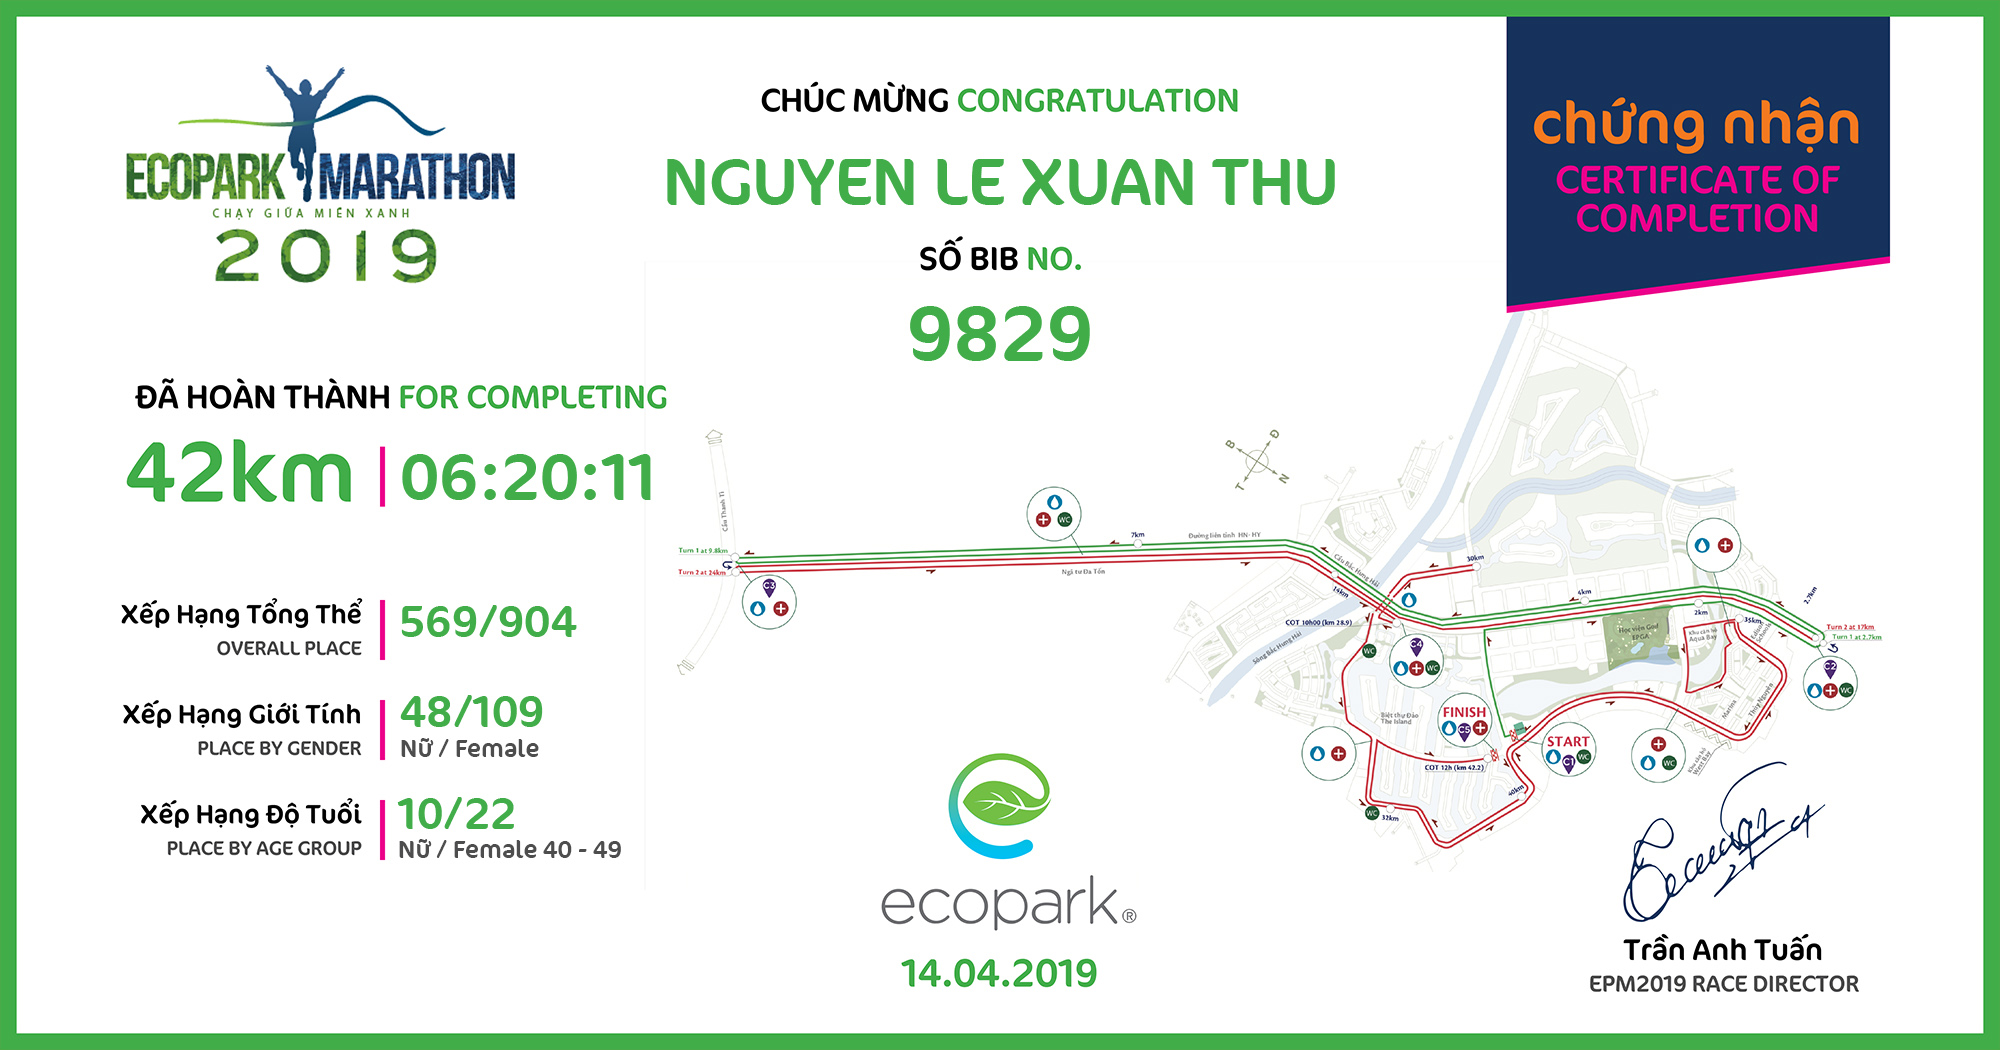 9829 - Nguyen Le Xuan Thu